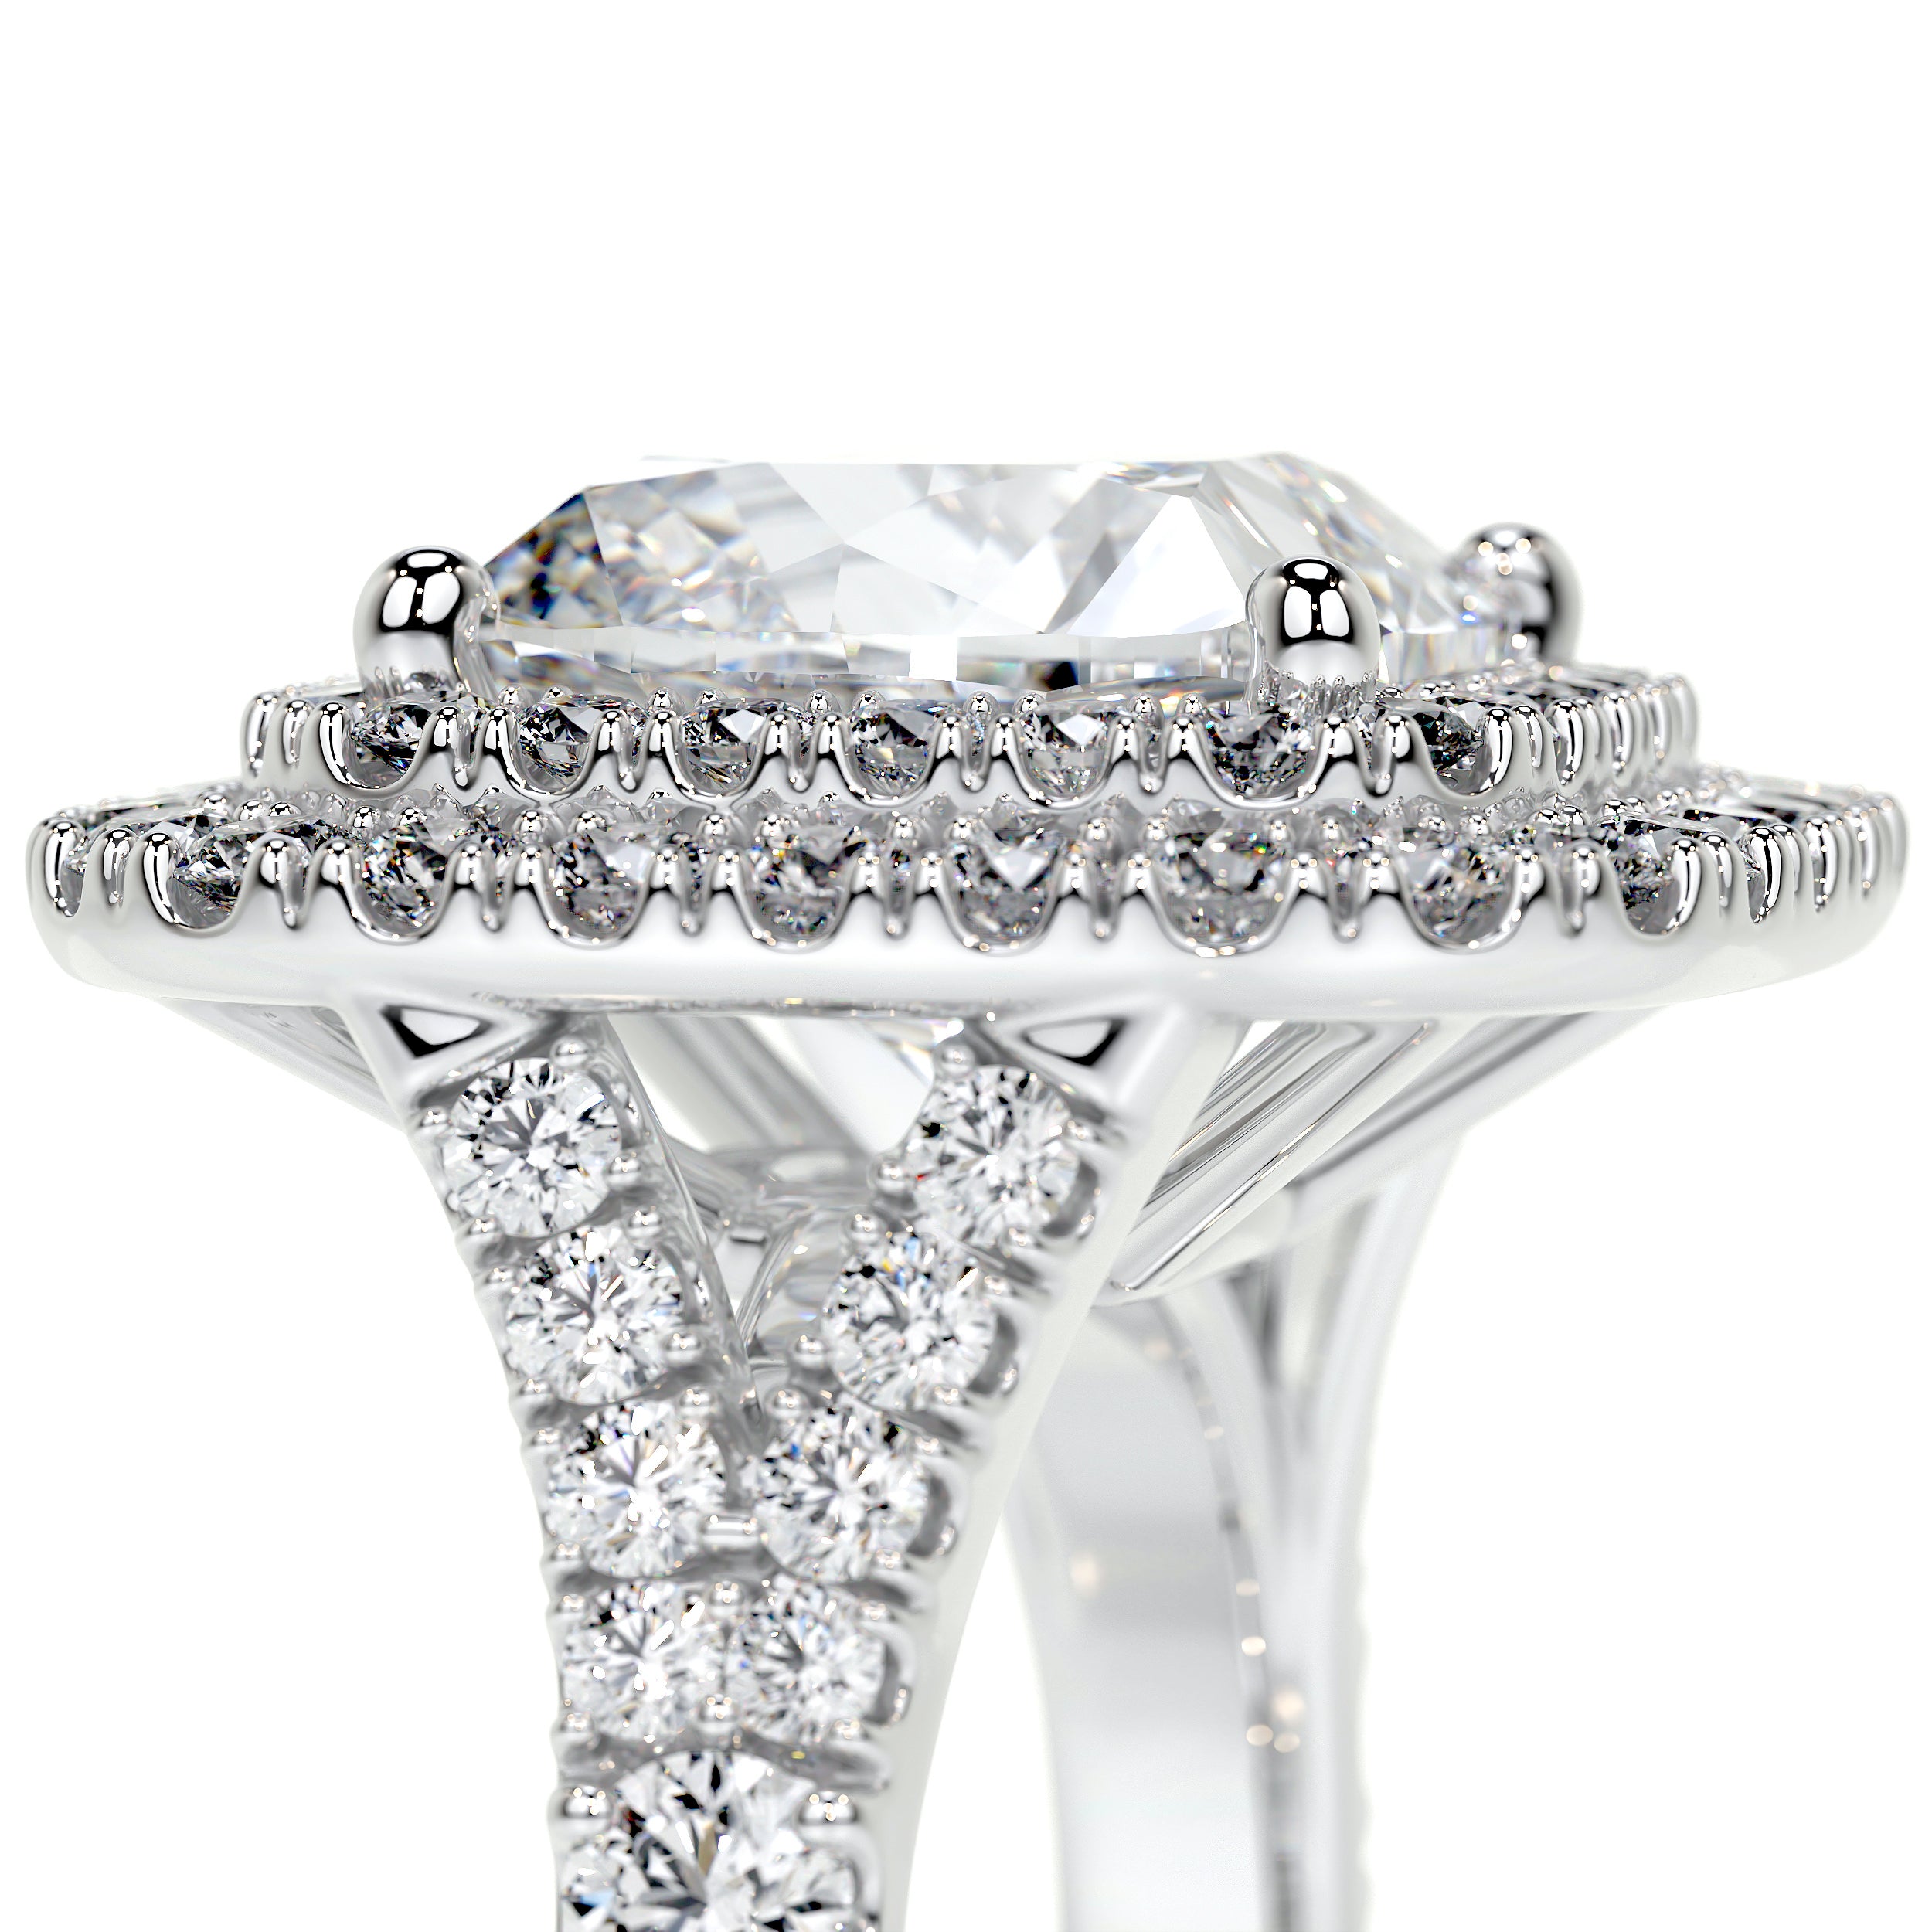 Marley Diamond Engagement Ring - 18K White Gold